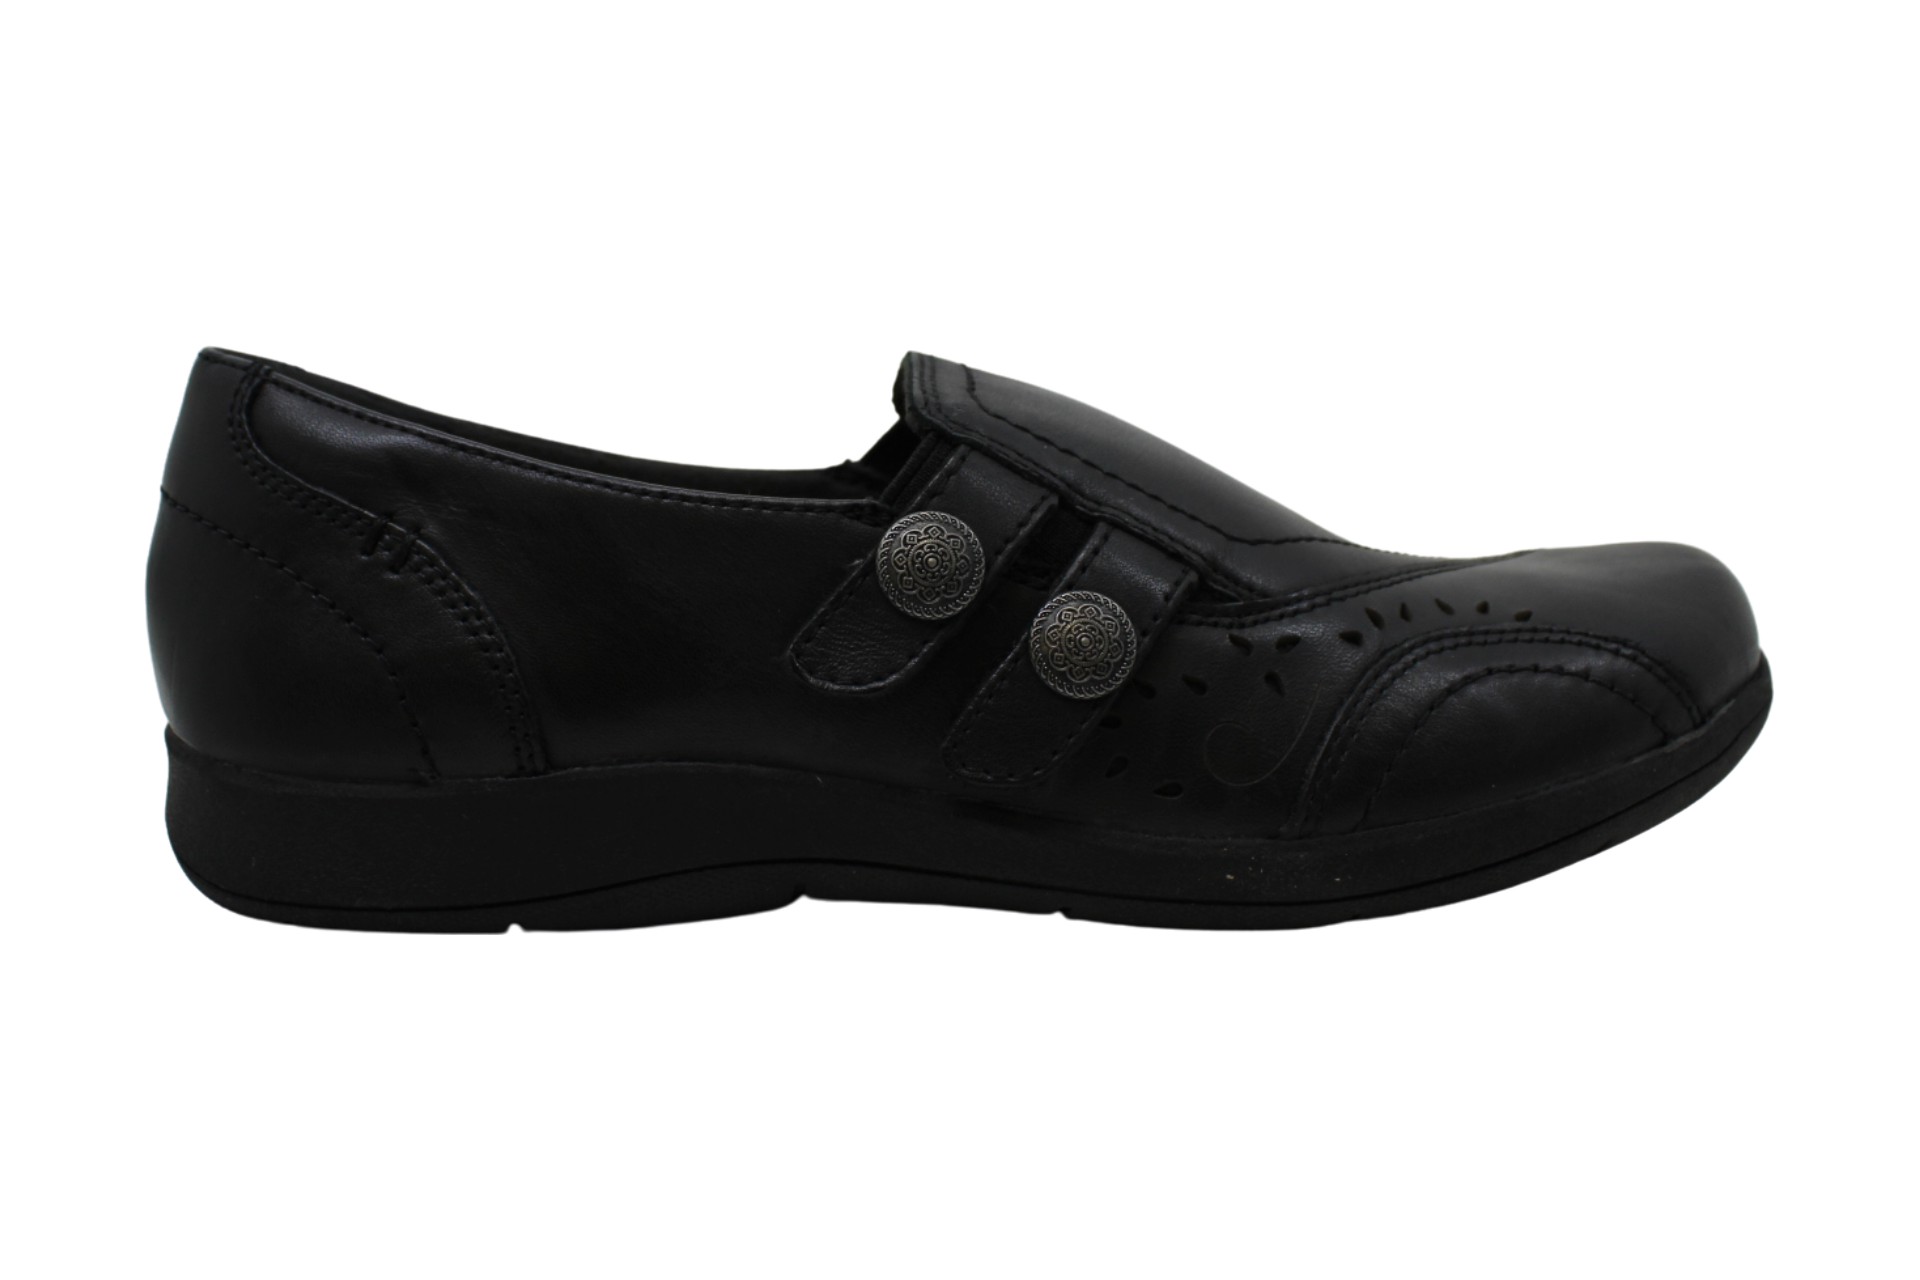 Rockport Women's Shoes Daisey slip on Leather Closed Toe, Black, Size 7 ...